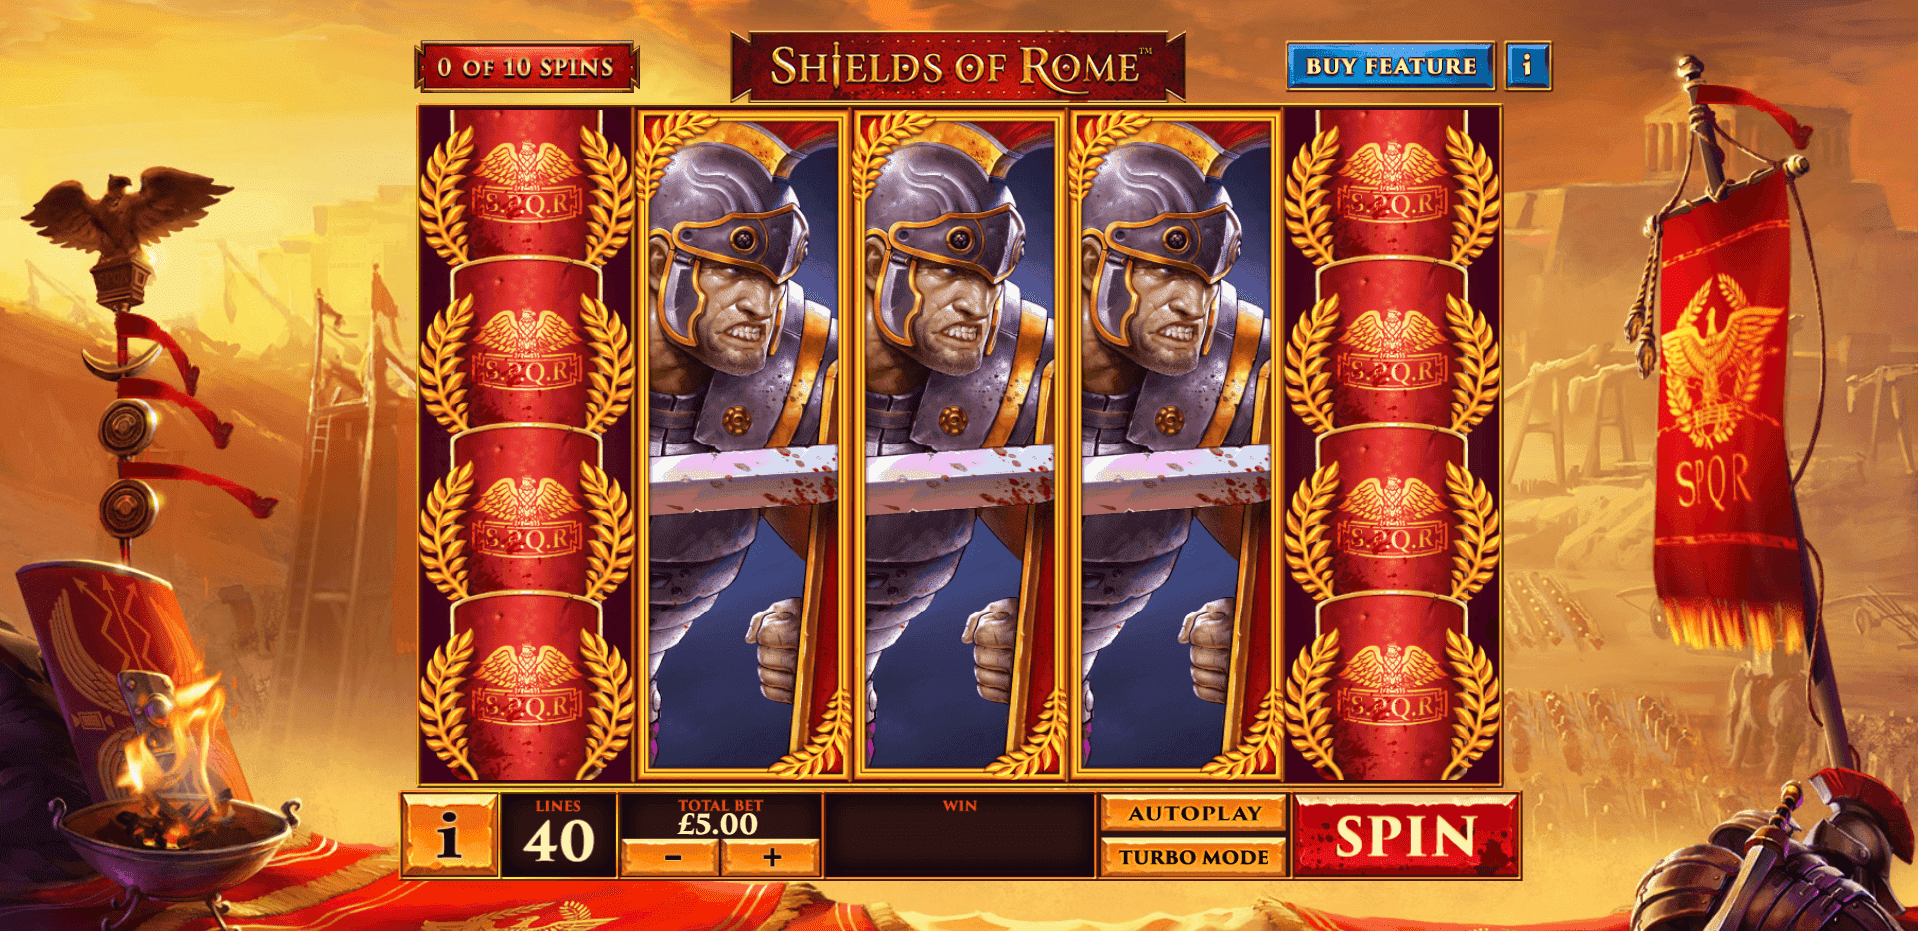 Shields of Rome slot play free